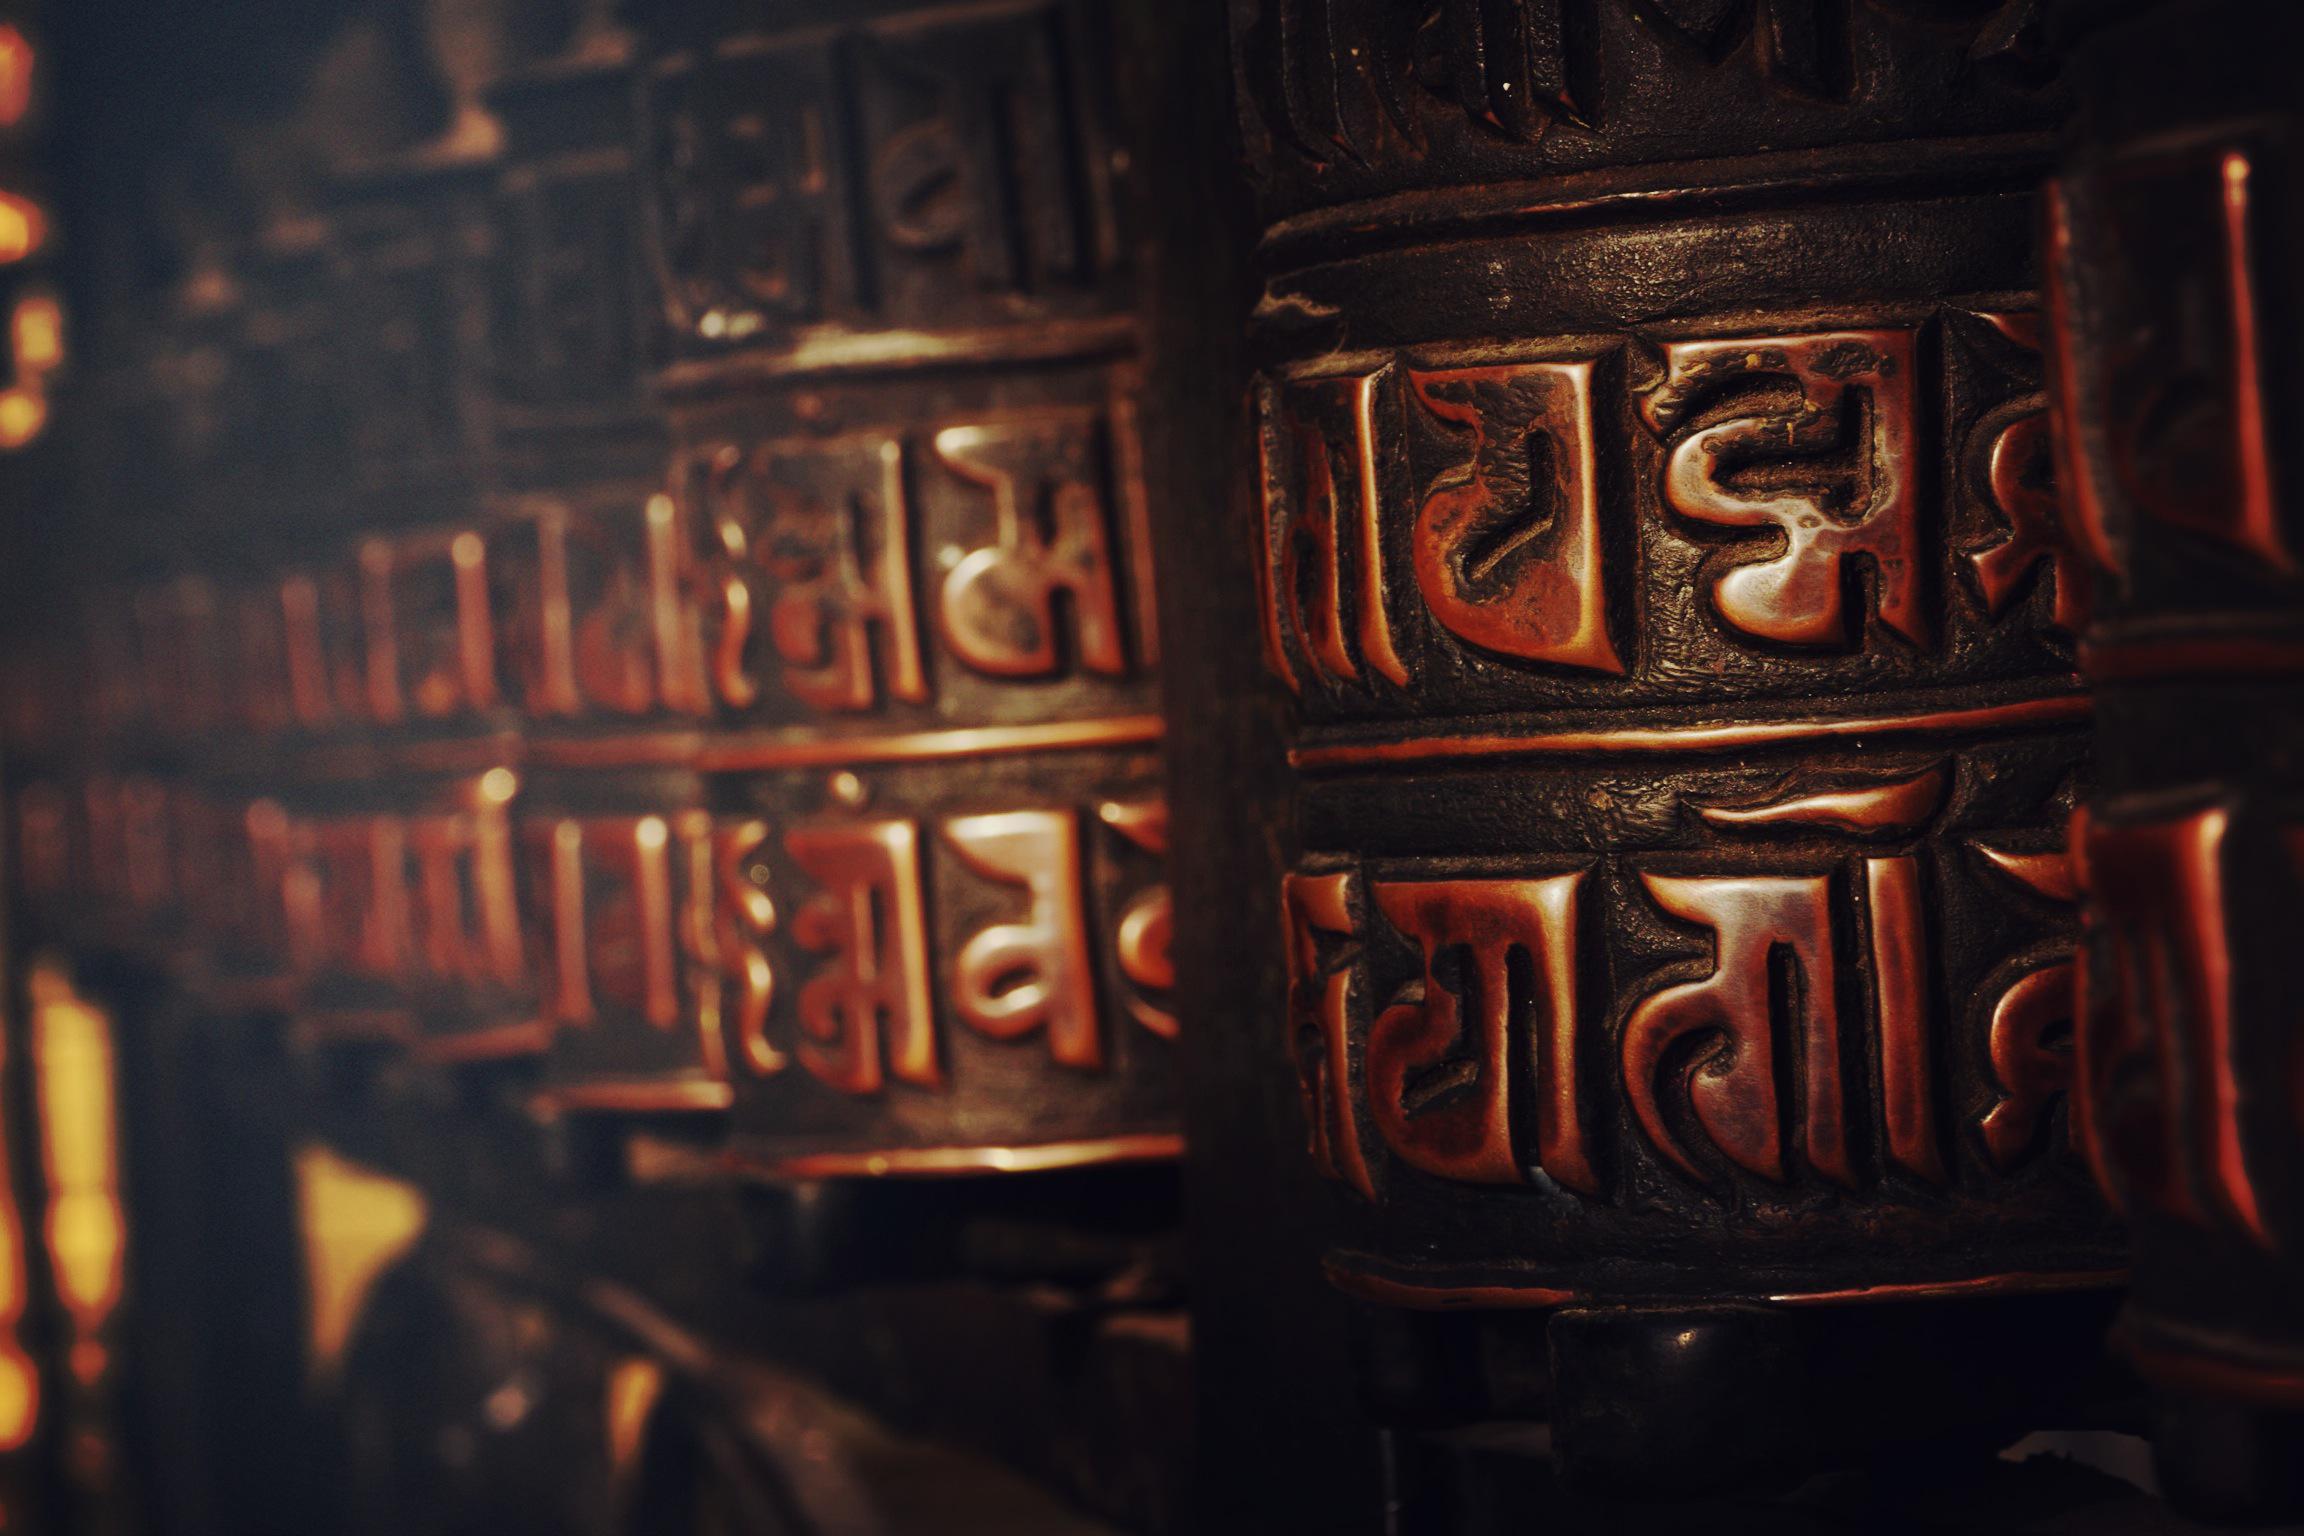 Gallery Nepal - Image 13